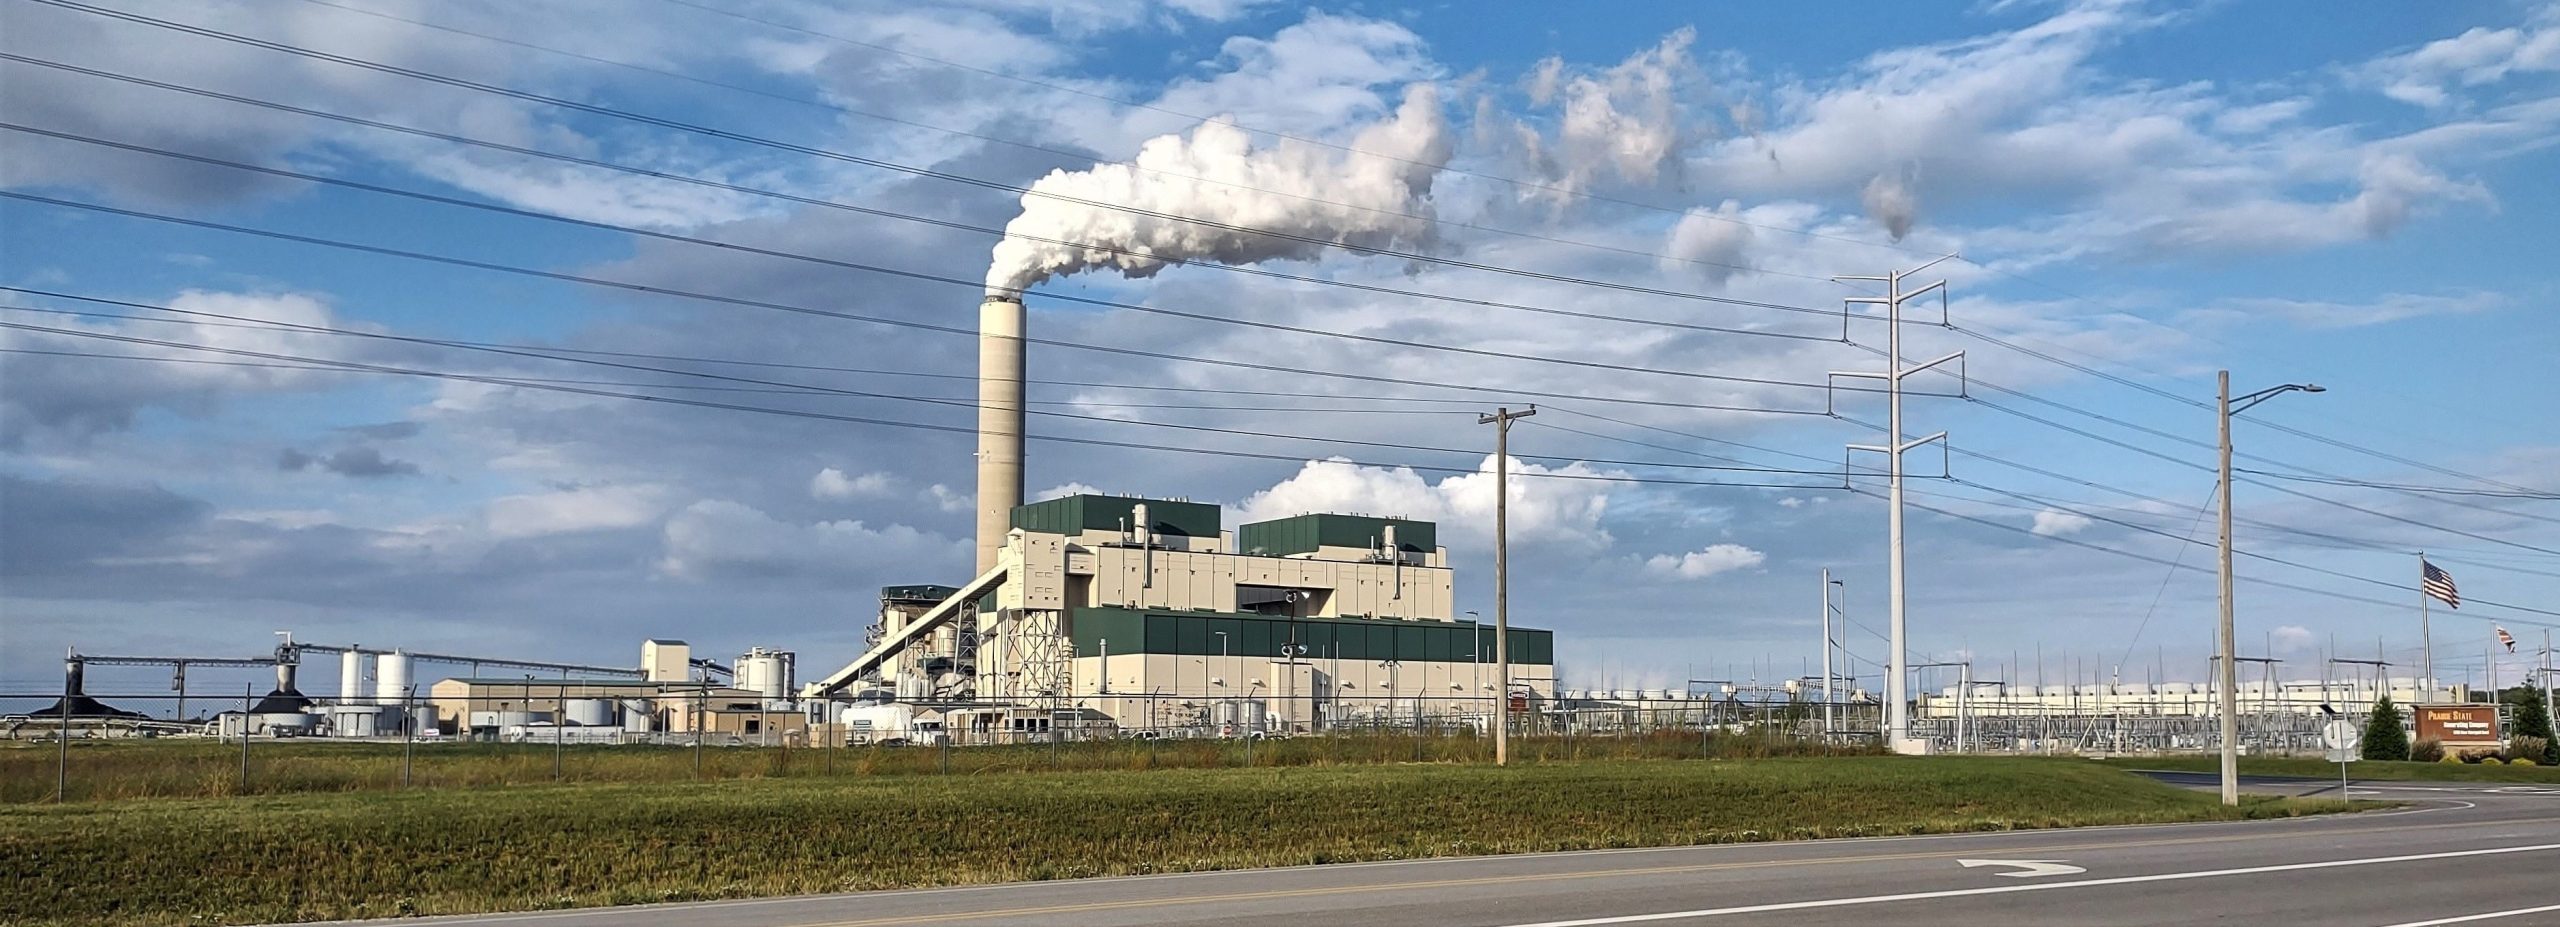 Photograph of the Prairie State Energy Campus, southwestern Washington County, Illinois.